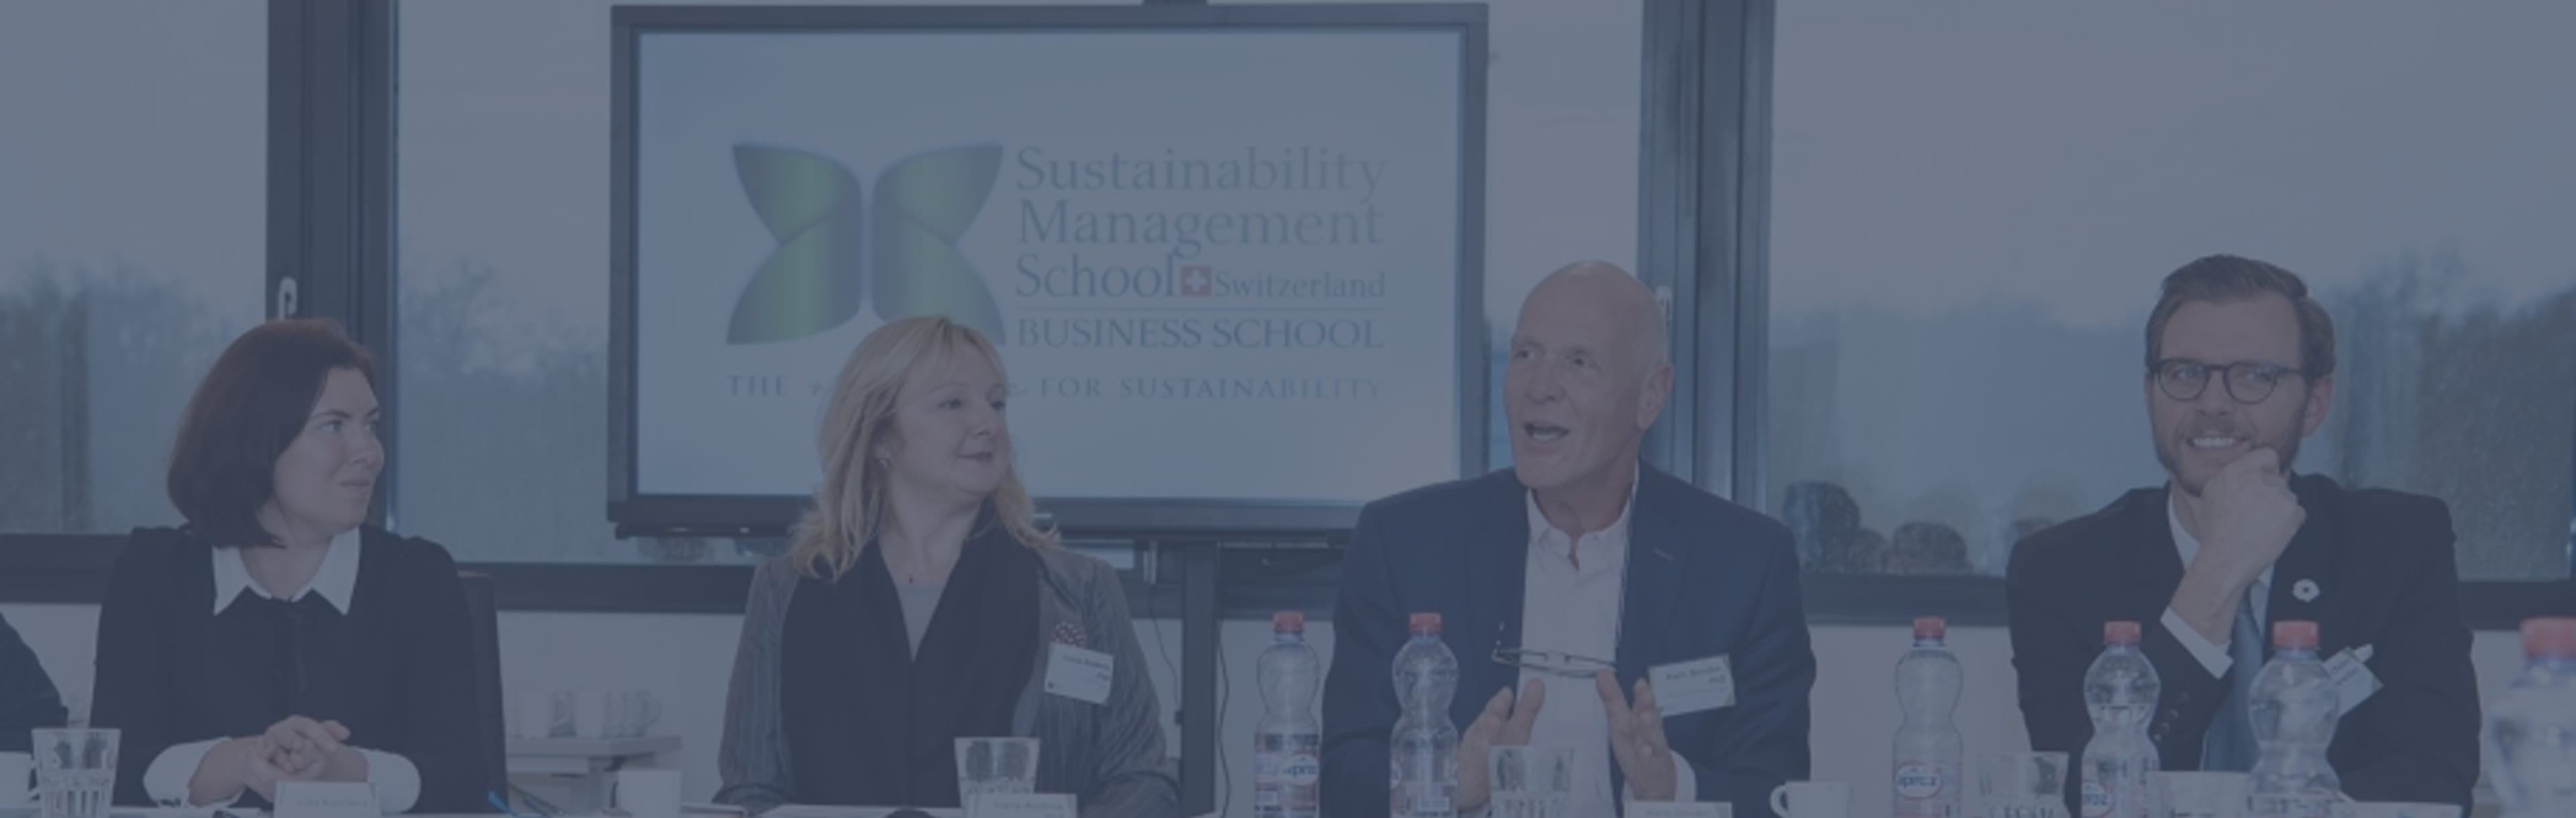 Sustainability Management School MBA dalam Pengurusan Kelestarian